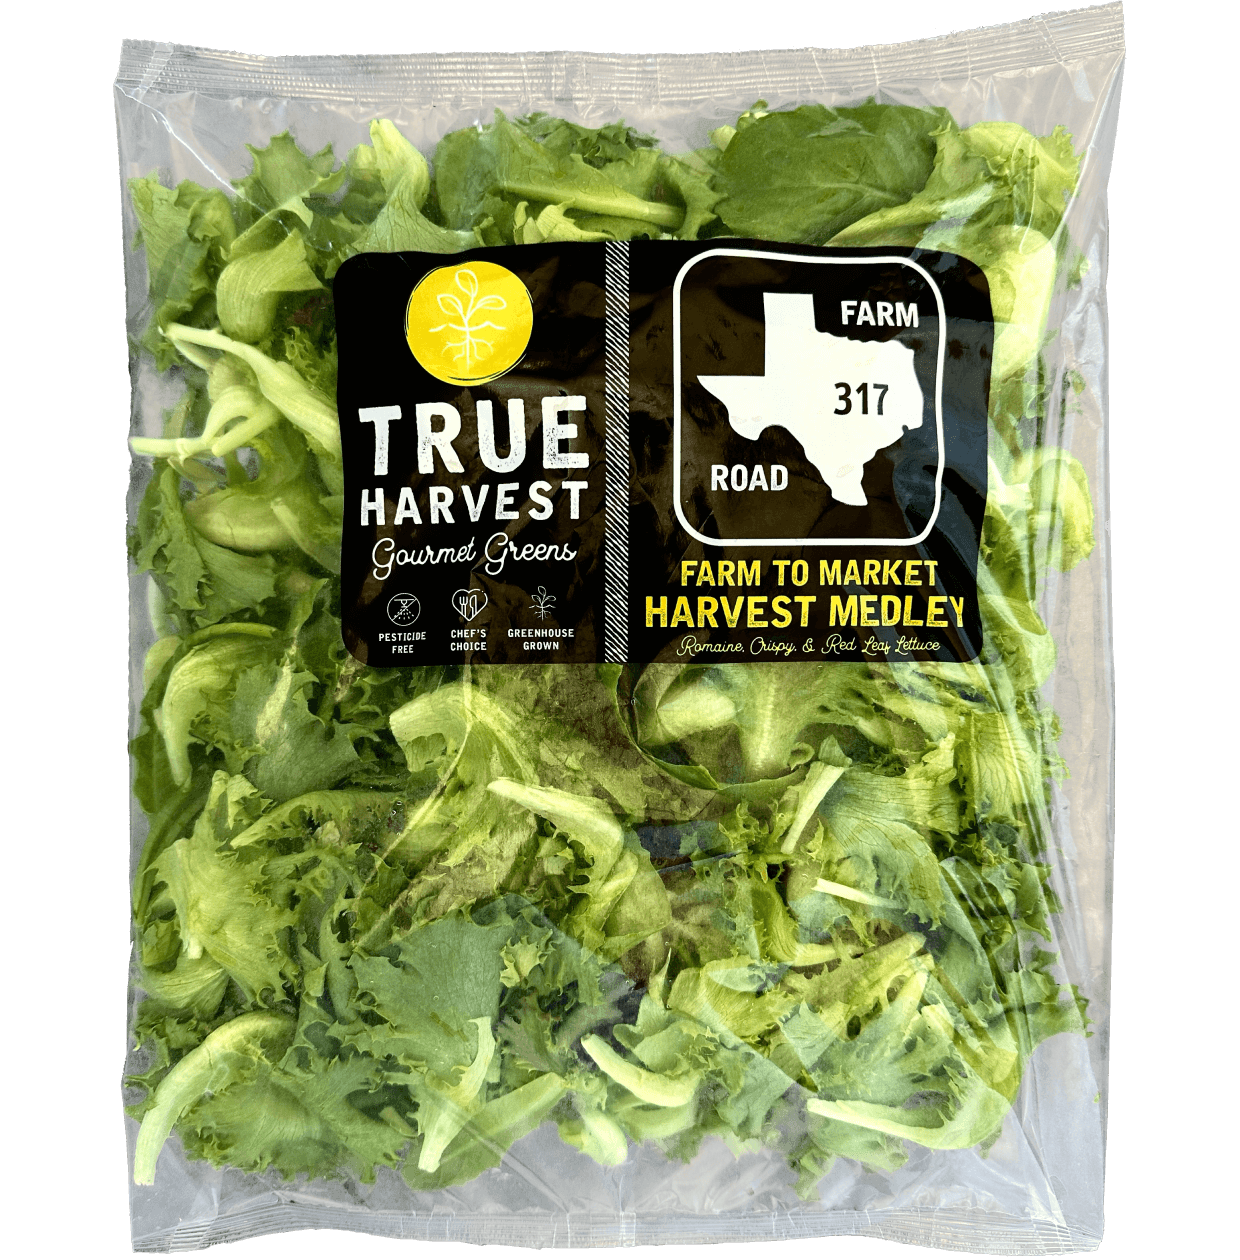 TrueHarvest Farms gourmet greens farm to market Harvest Medley bagged lettuce